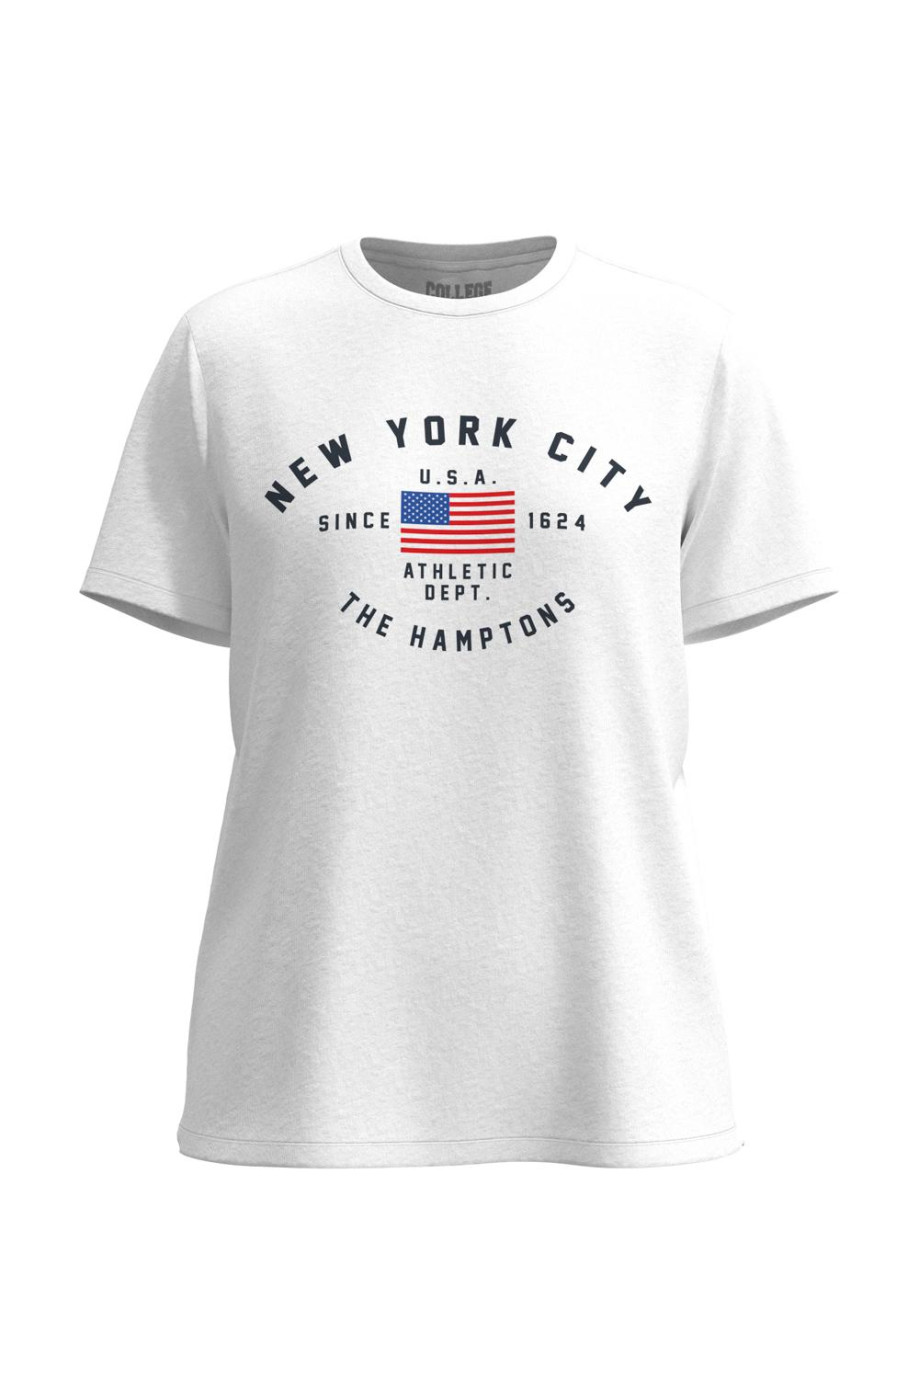 Camiseta manga corta unicolor con texto college de New York